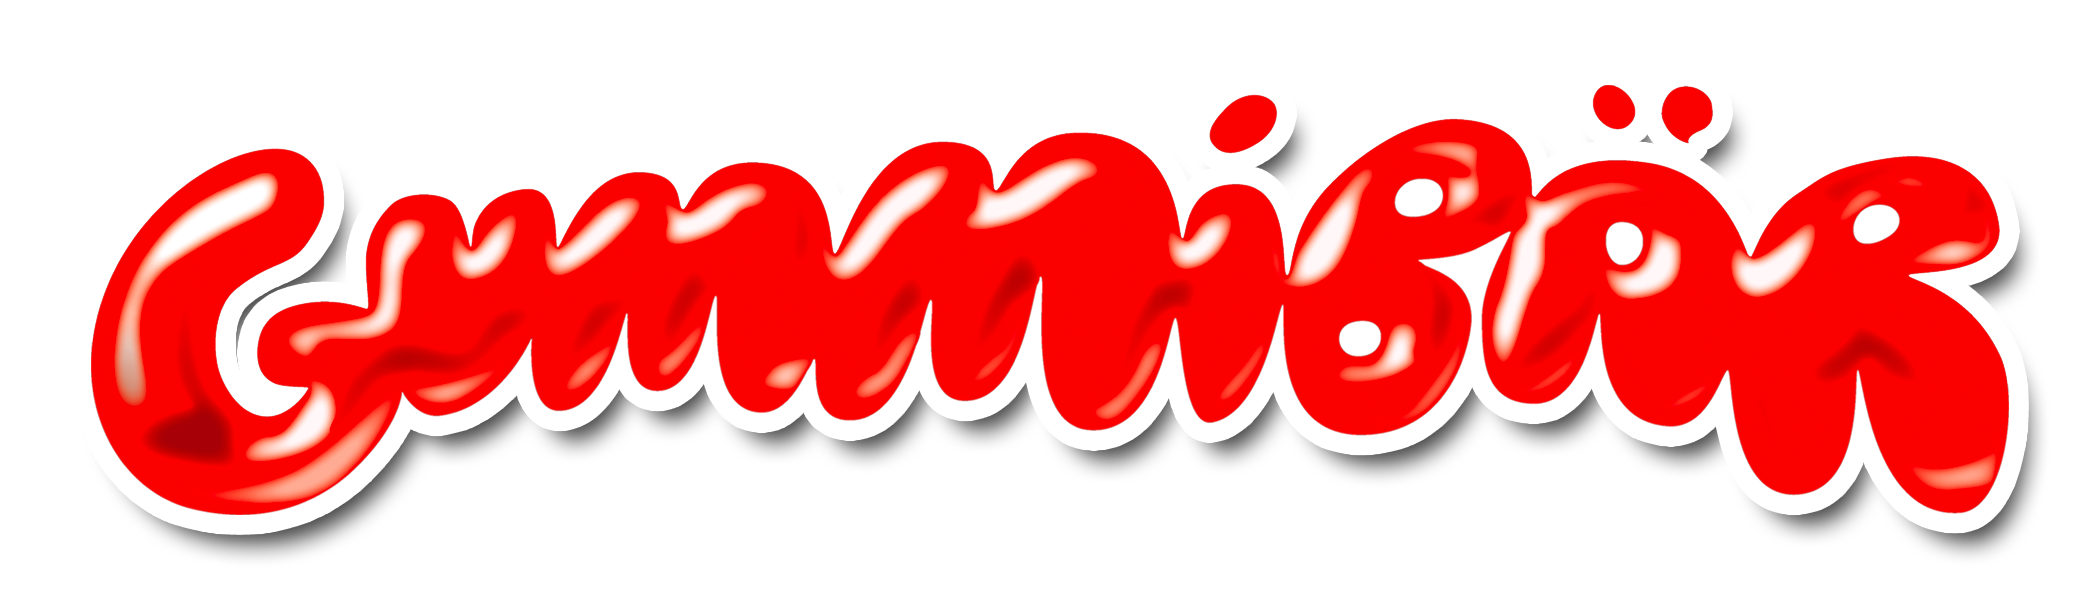 Gummibär - Logo with Stroke.png